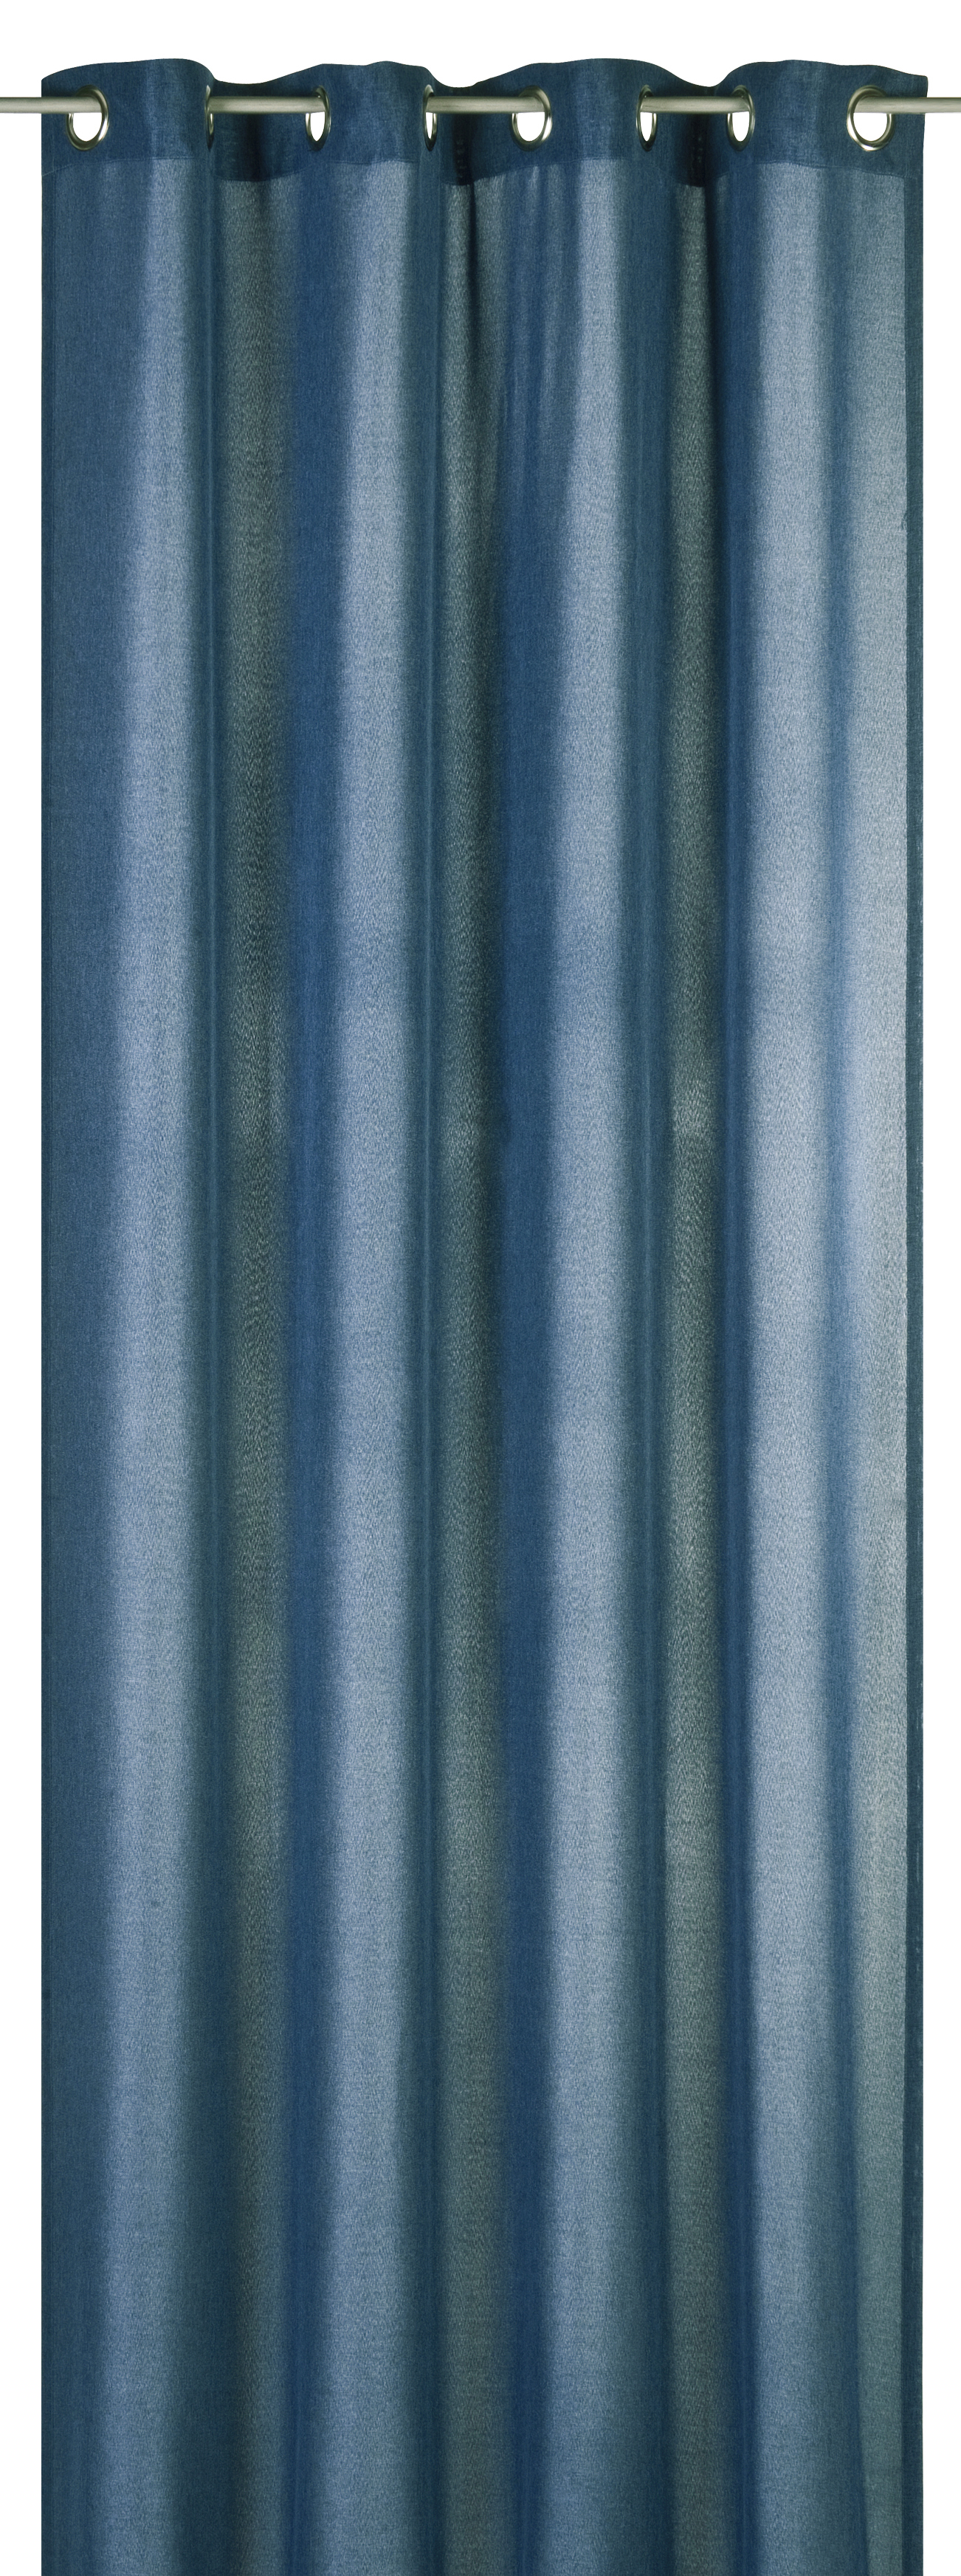 Elbersdrucke Lino 01 Fertigvorhang, 140 x 255 cm